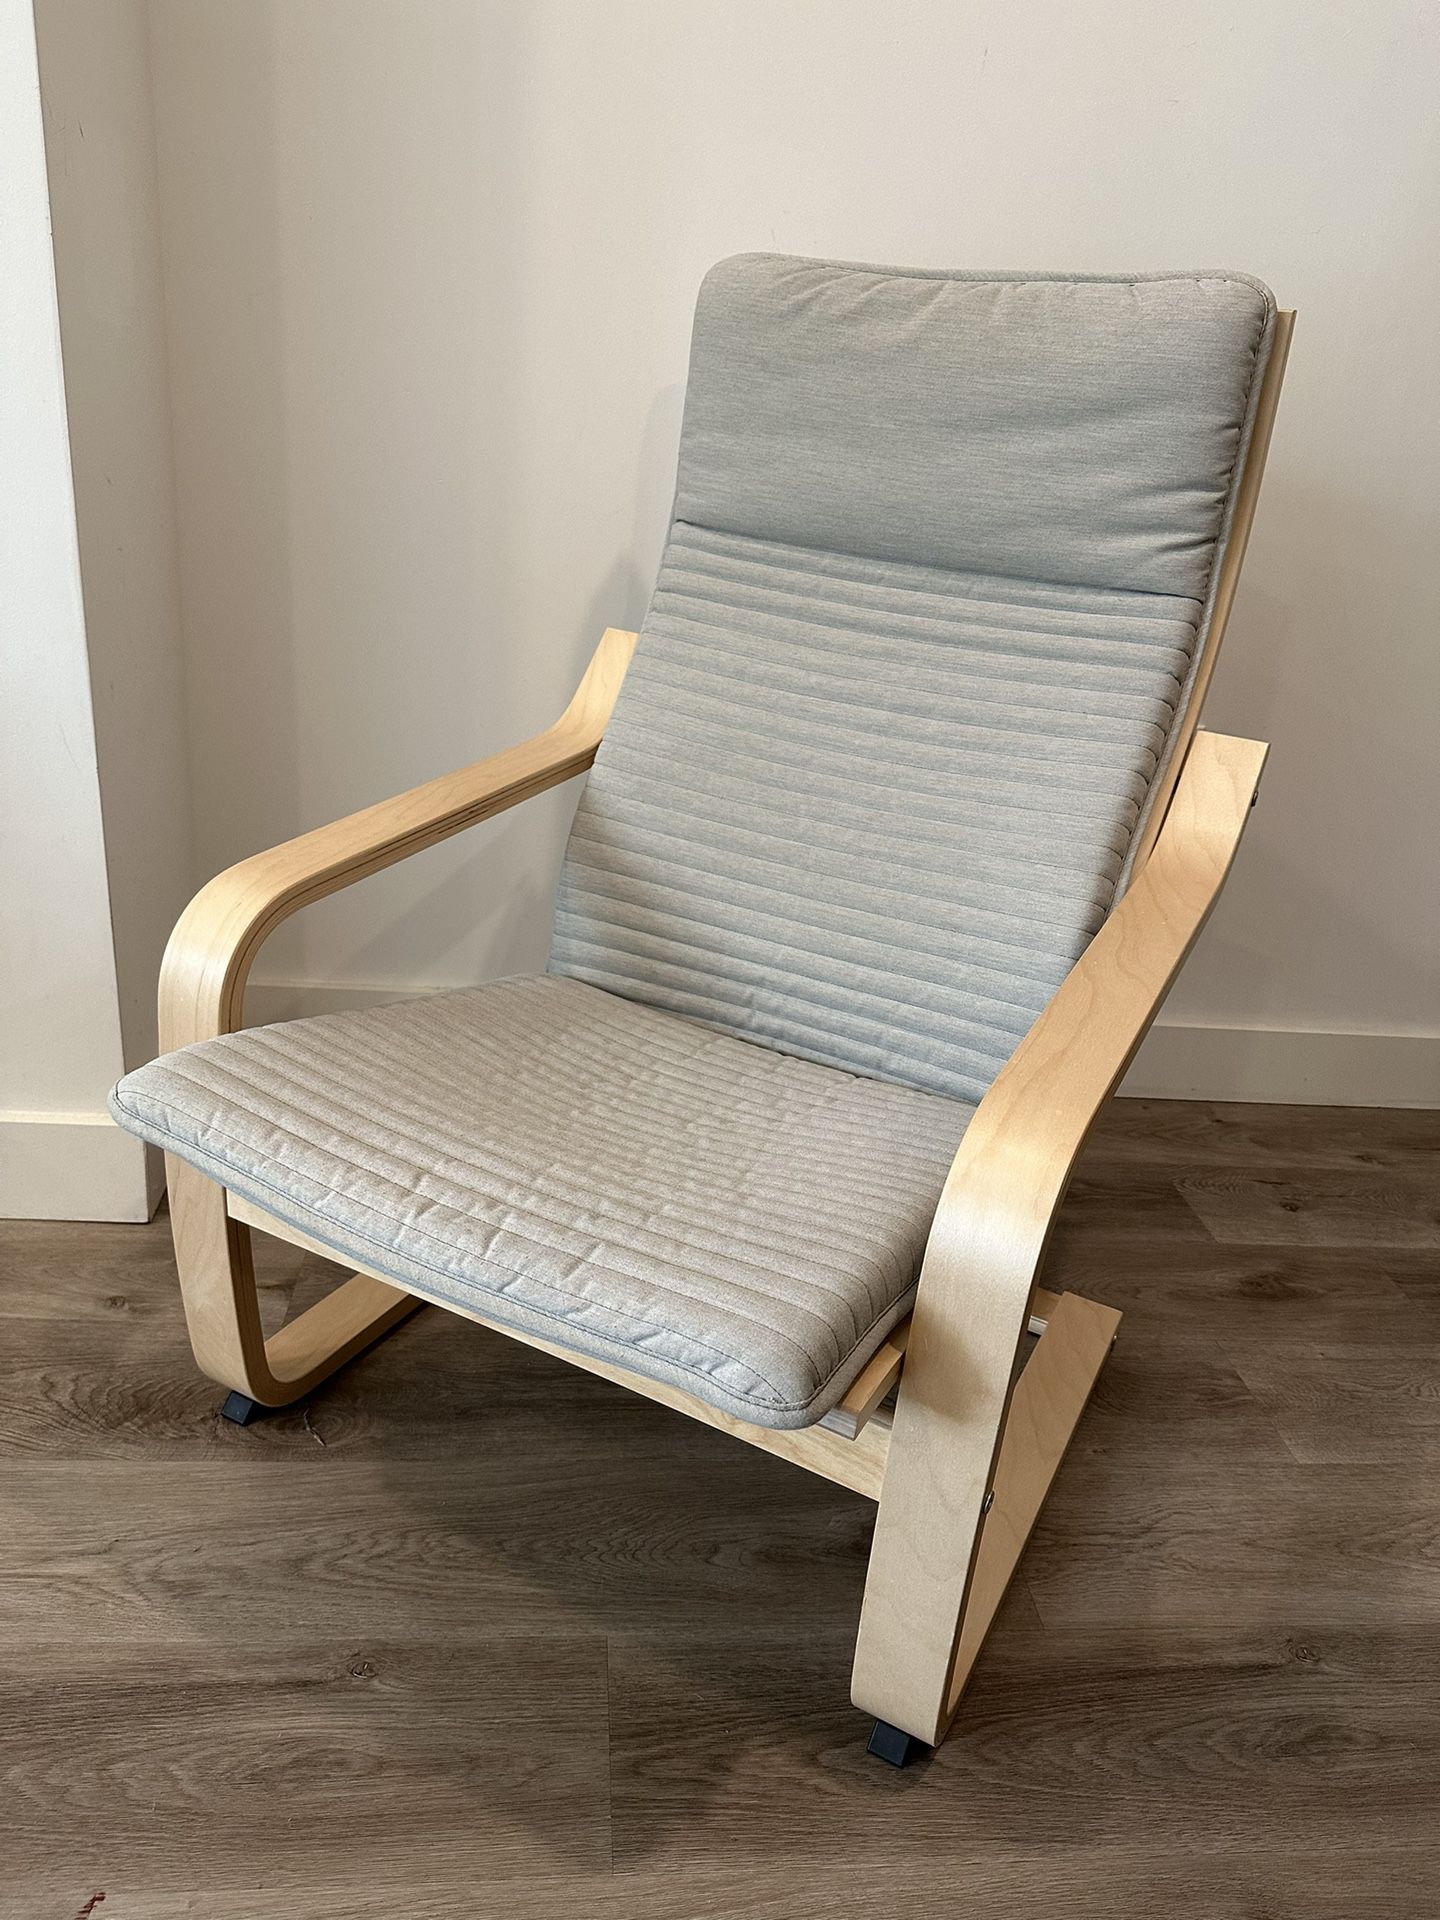 Armchair - Rocking chair - Ikea Poang